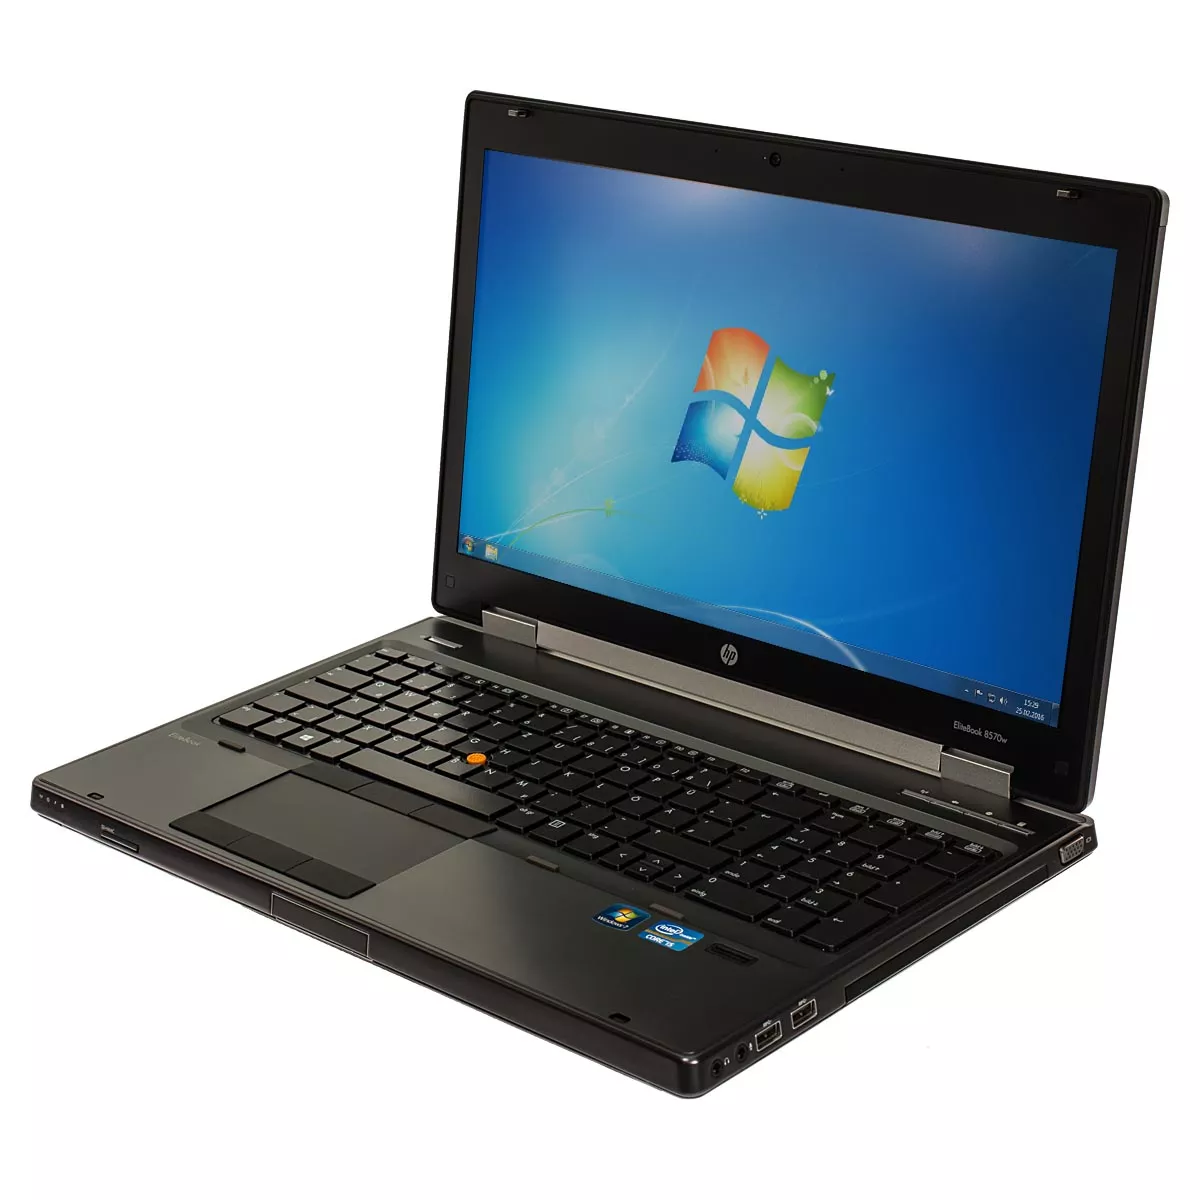 HP Elitebook 8570w Quad Core i7 3840QM 2,8 GHz nVidia Quadro K1000M B-Ware